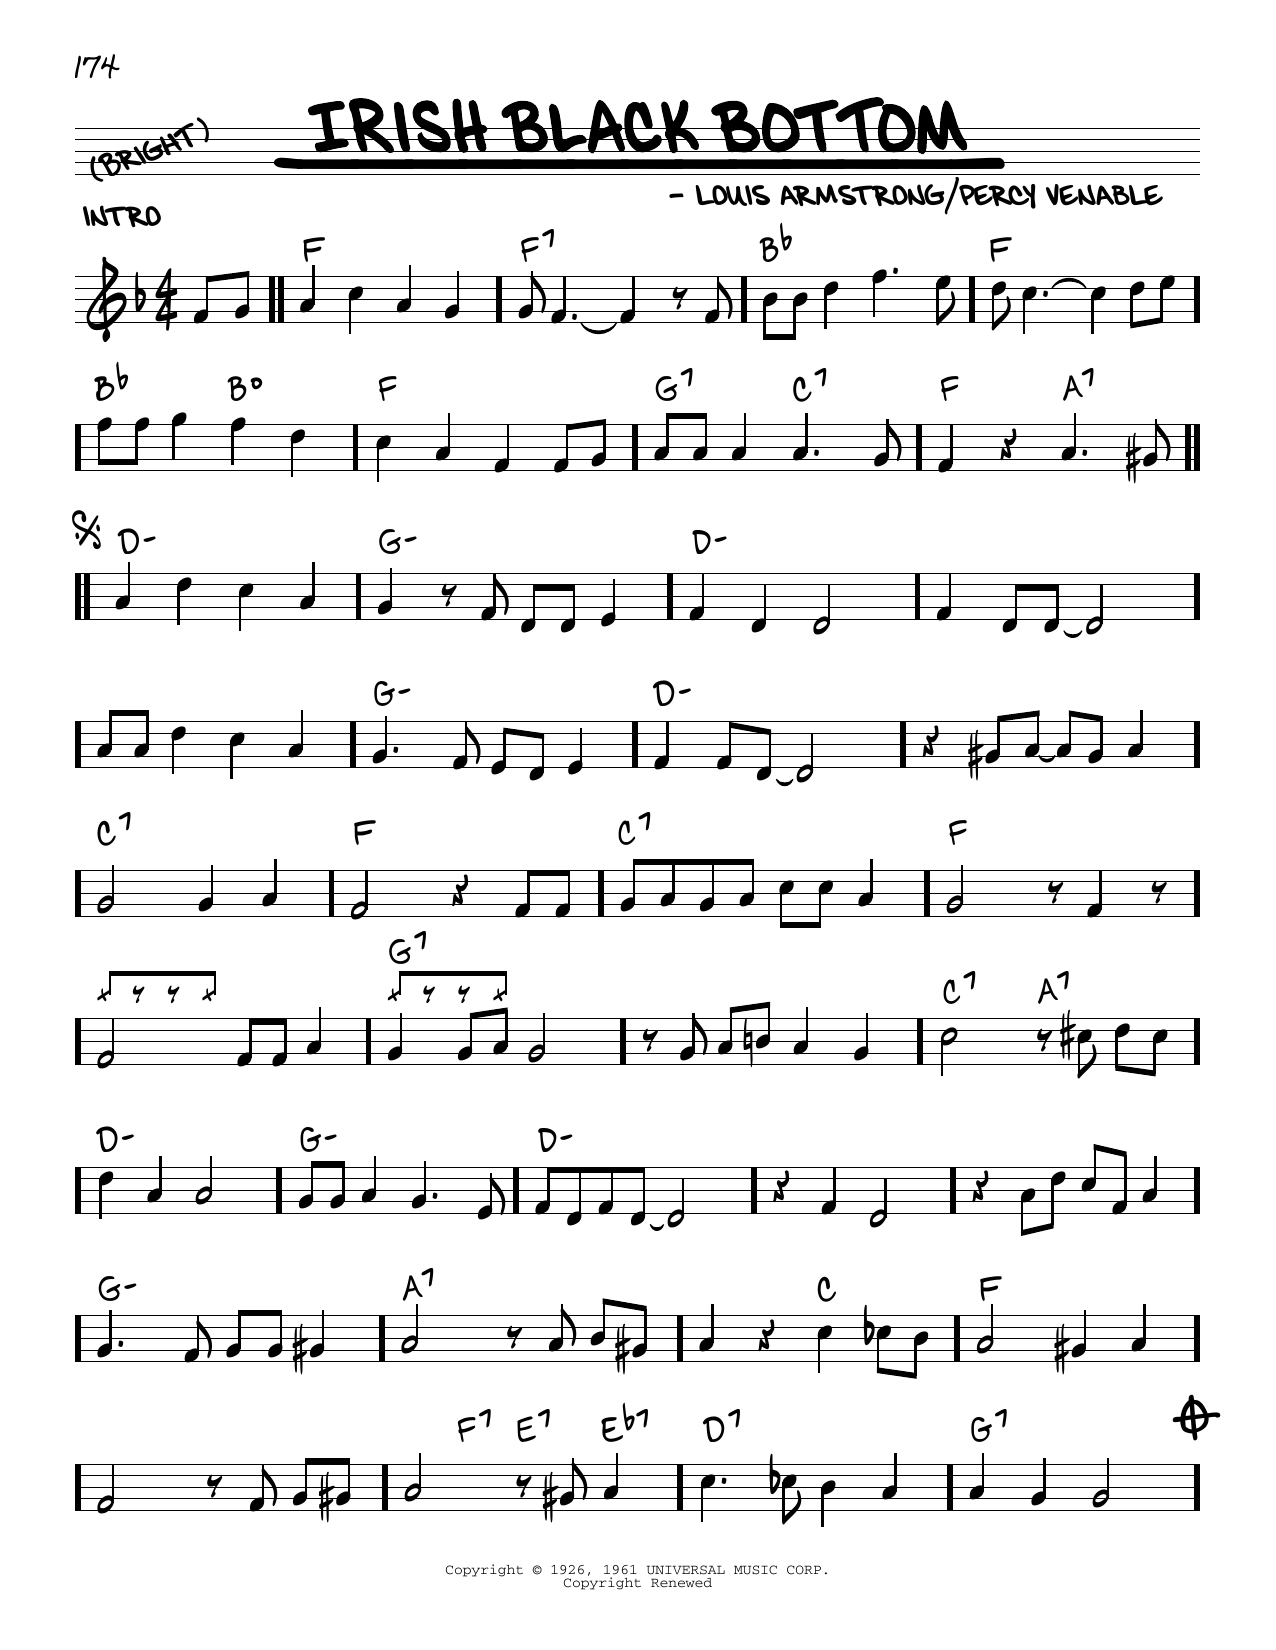 Louis Armstrong Irish Black Bottom (arr. Robert Rawlins) Sheet Music Notes & Chords for Real Book – Melody, Lyrics & Chords - Download or Print PDF